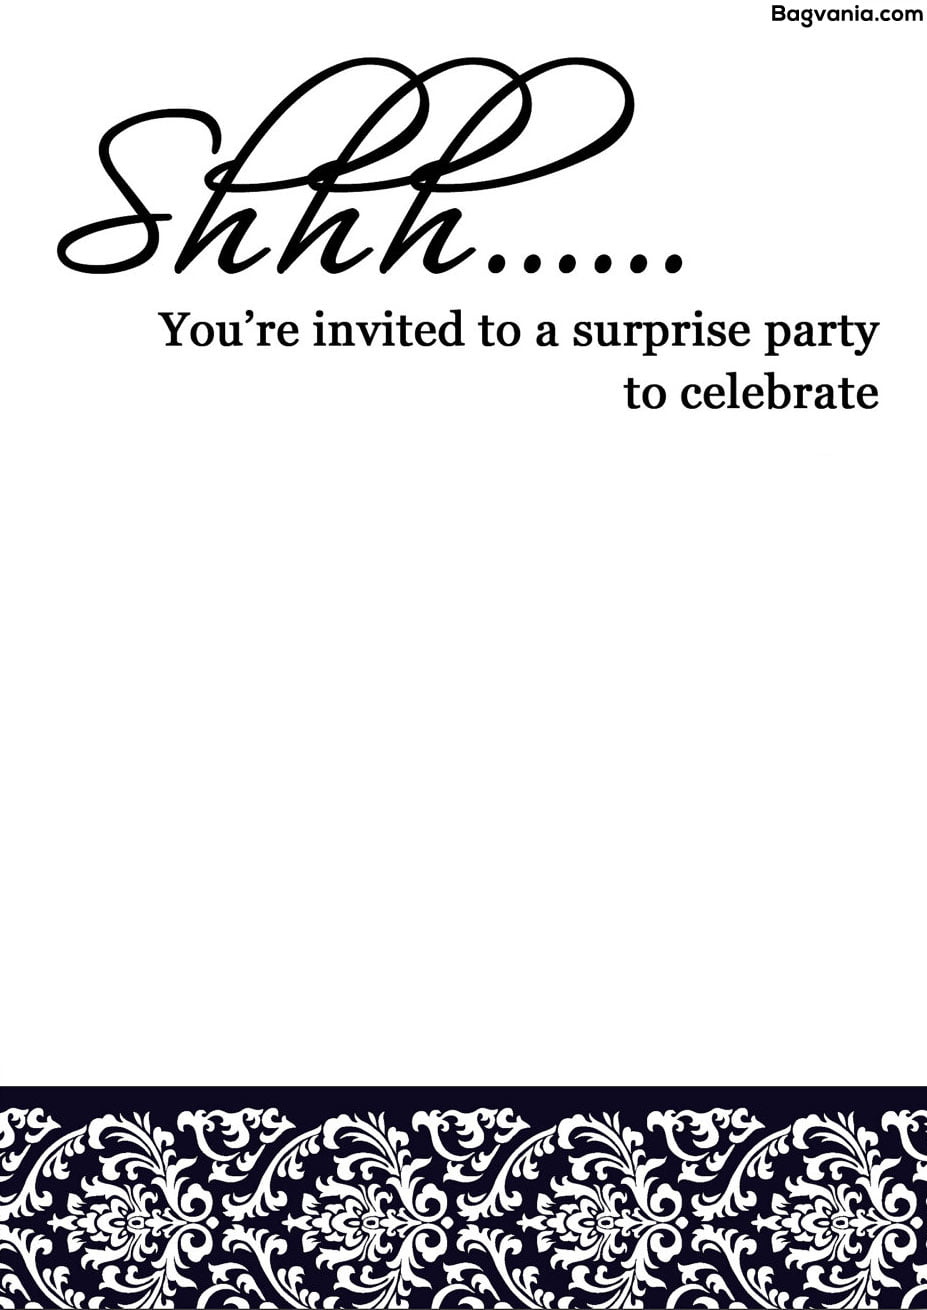 Free Printable Surprise Birthday Invitations Bagvania FREE Printable 